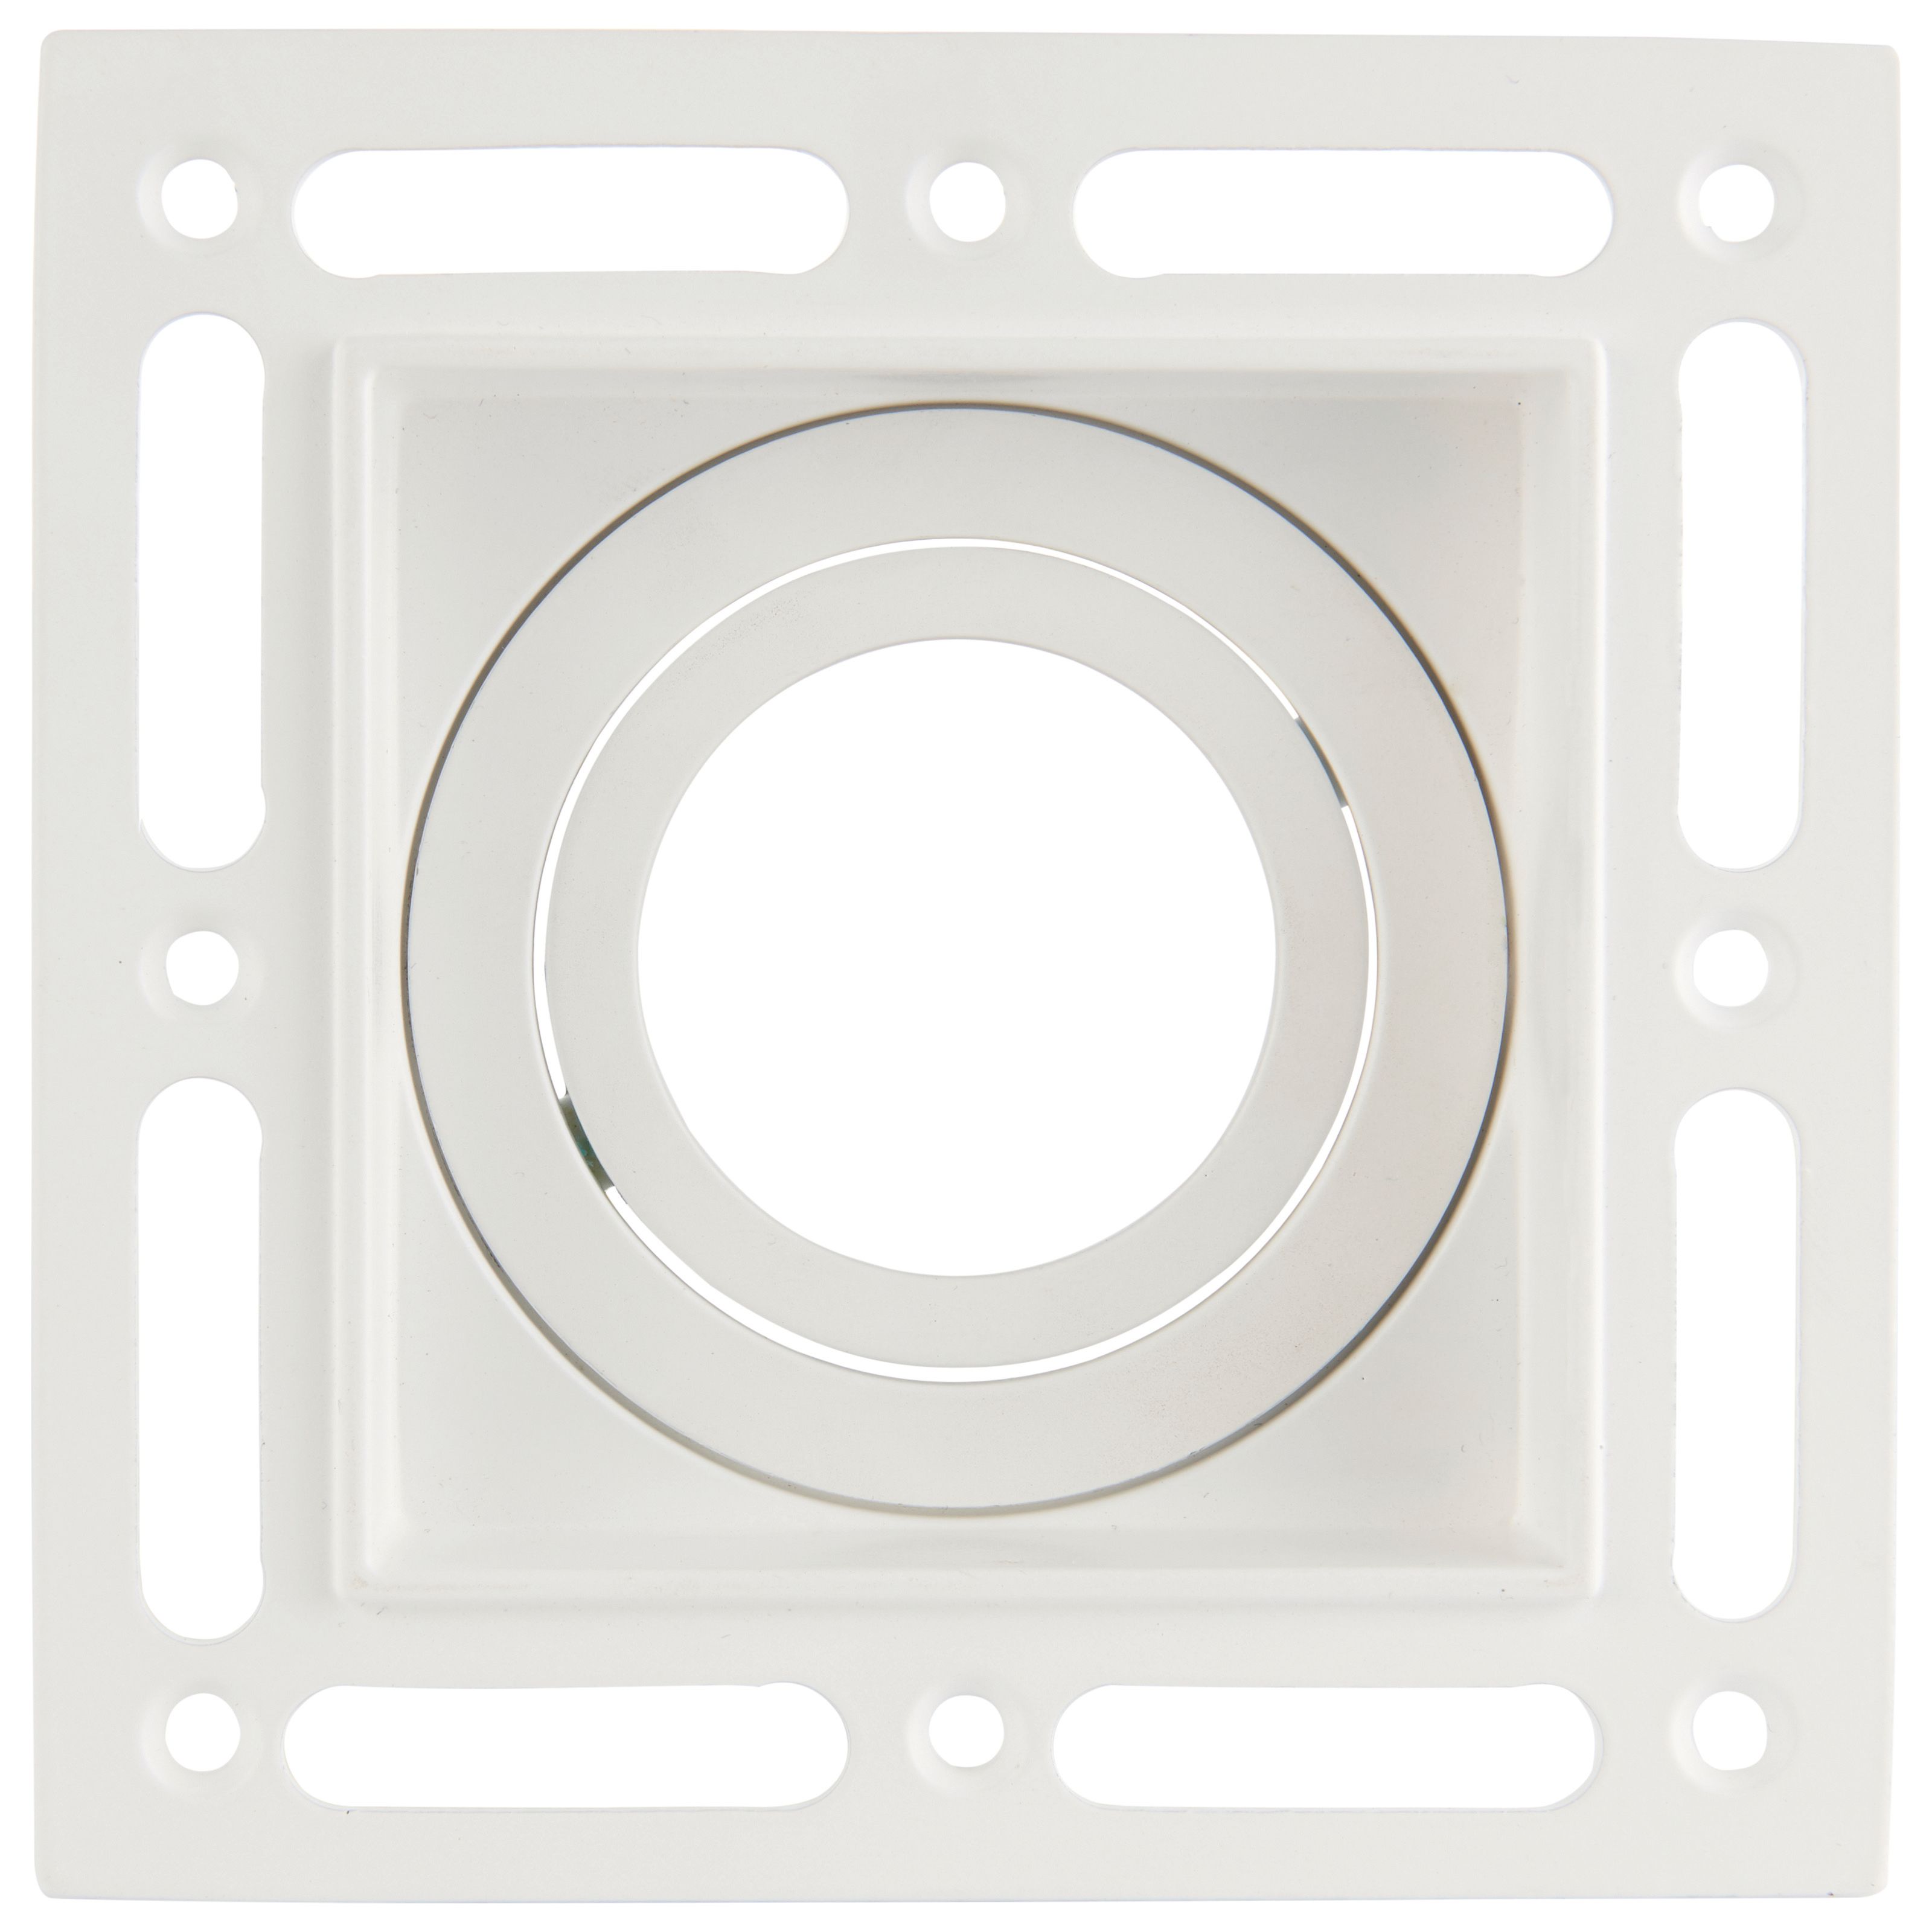 Saxby GU10 Trimless Plaster In Square Downlight 7W - White